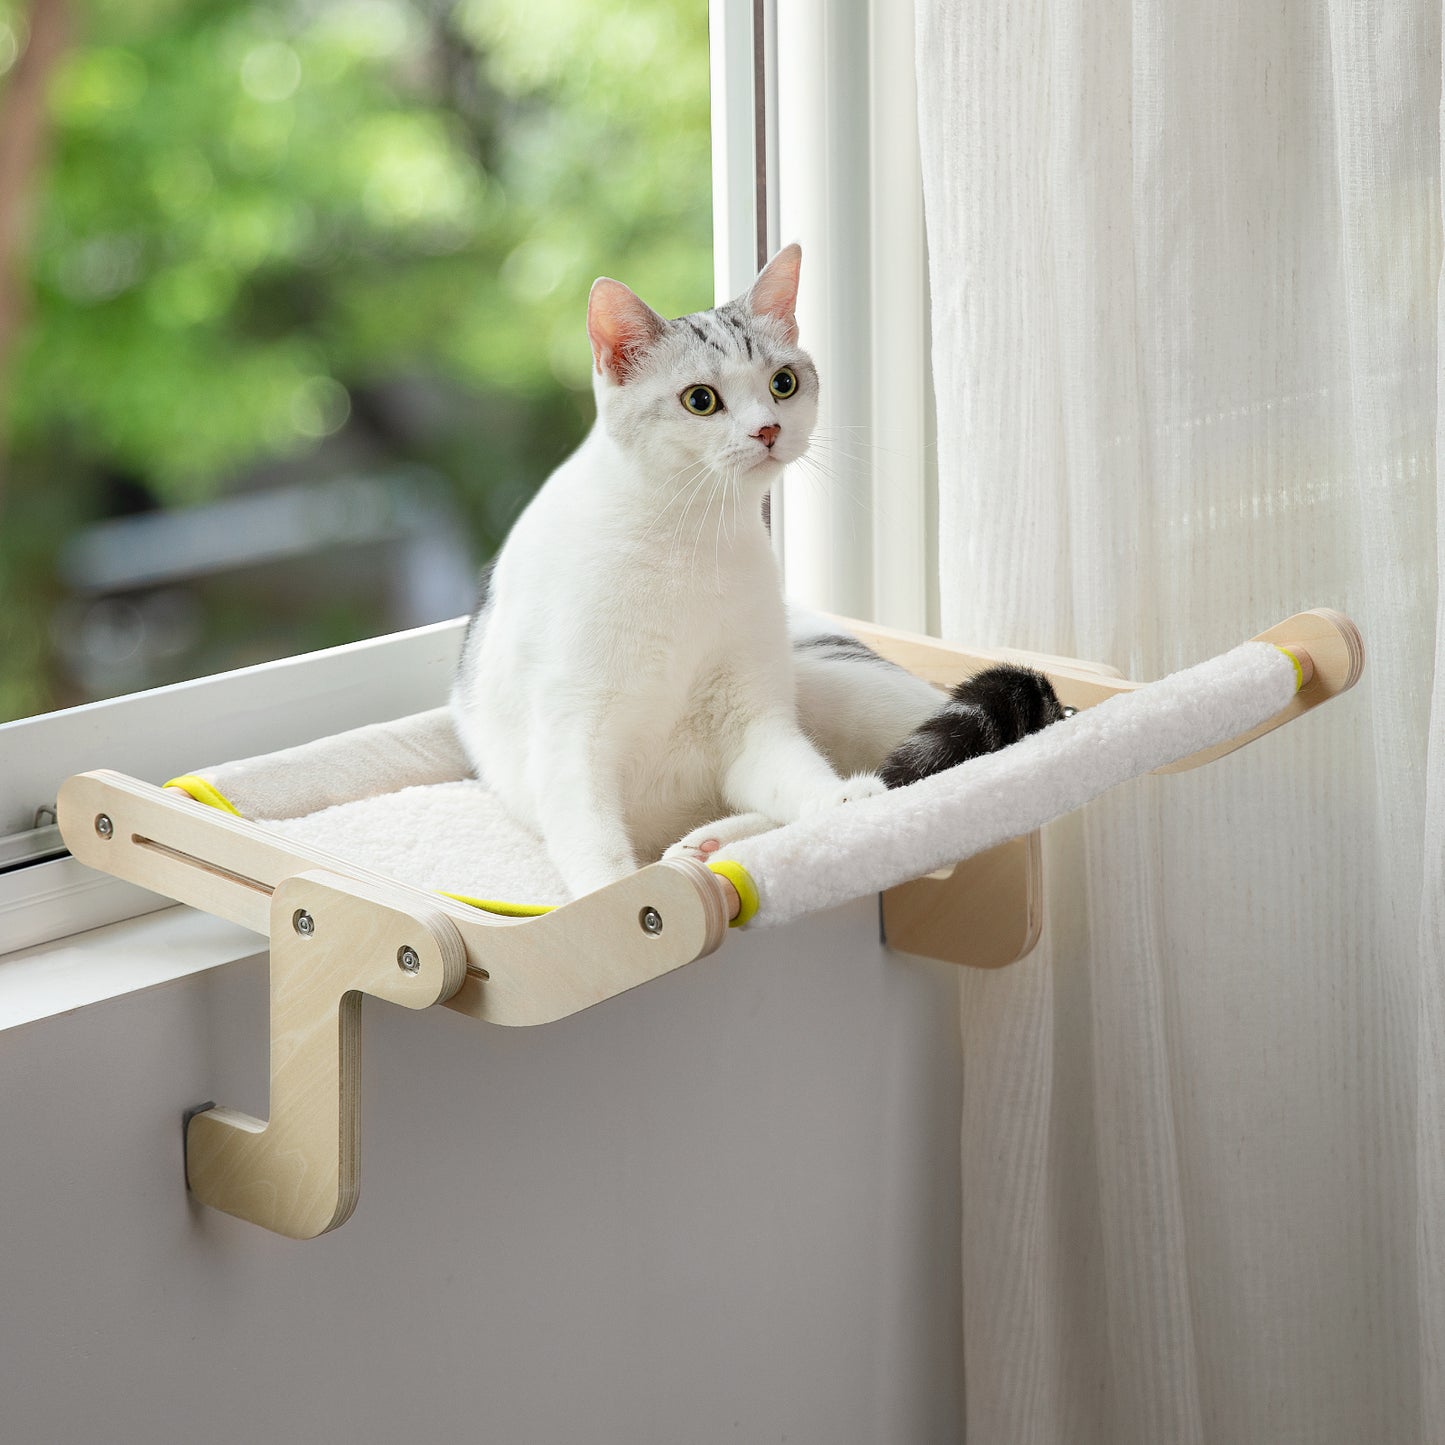 Mewoofun Cat Window Perch Hanging Bed